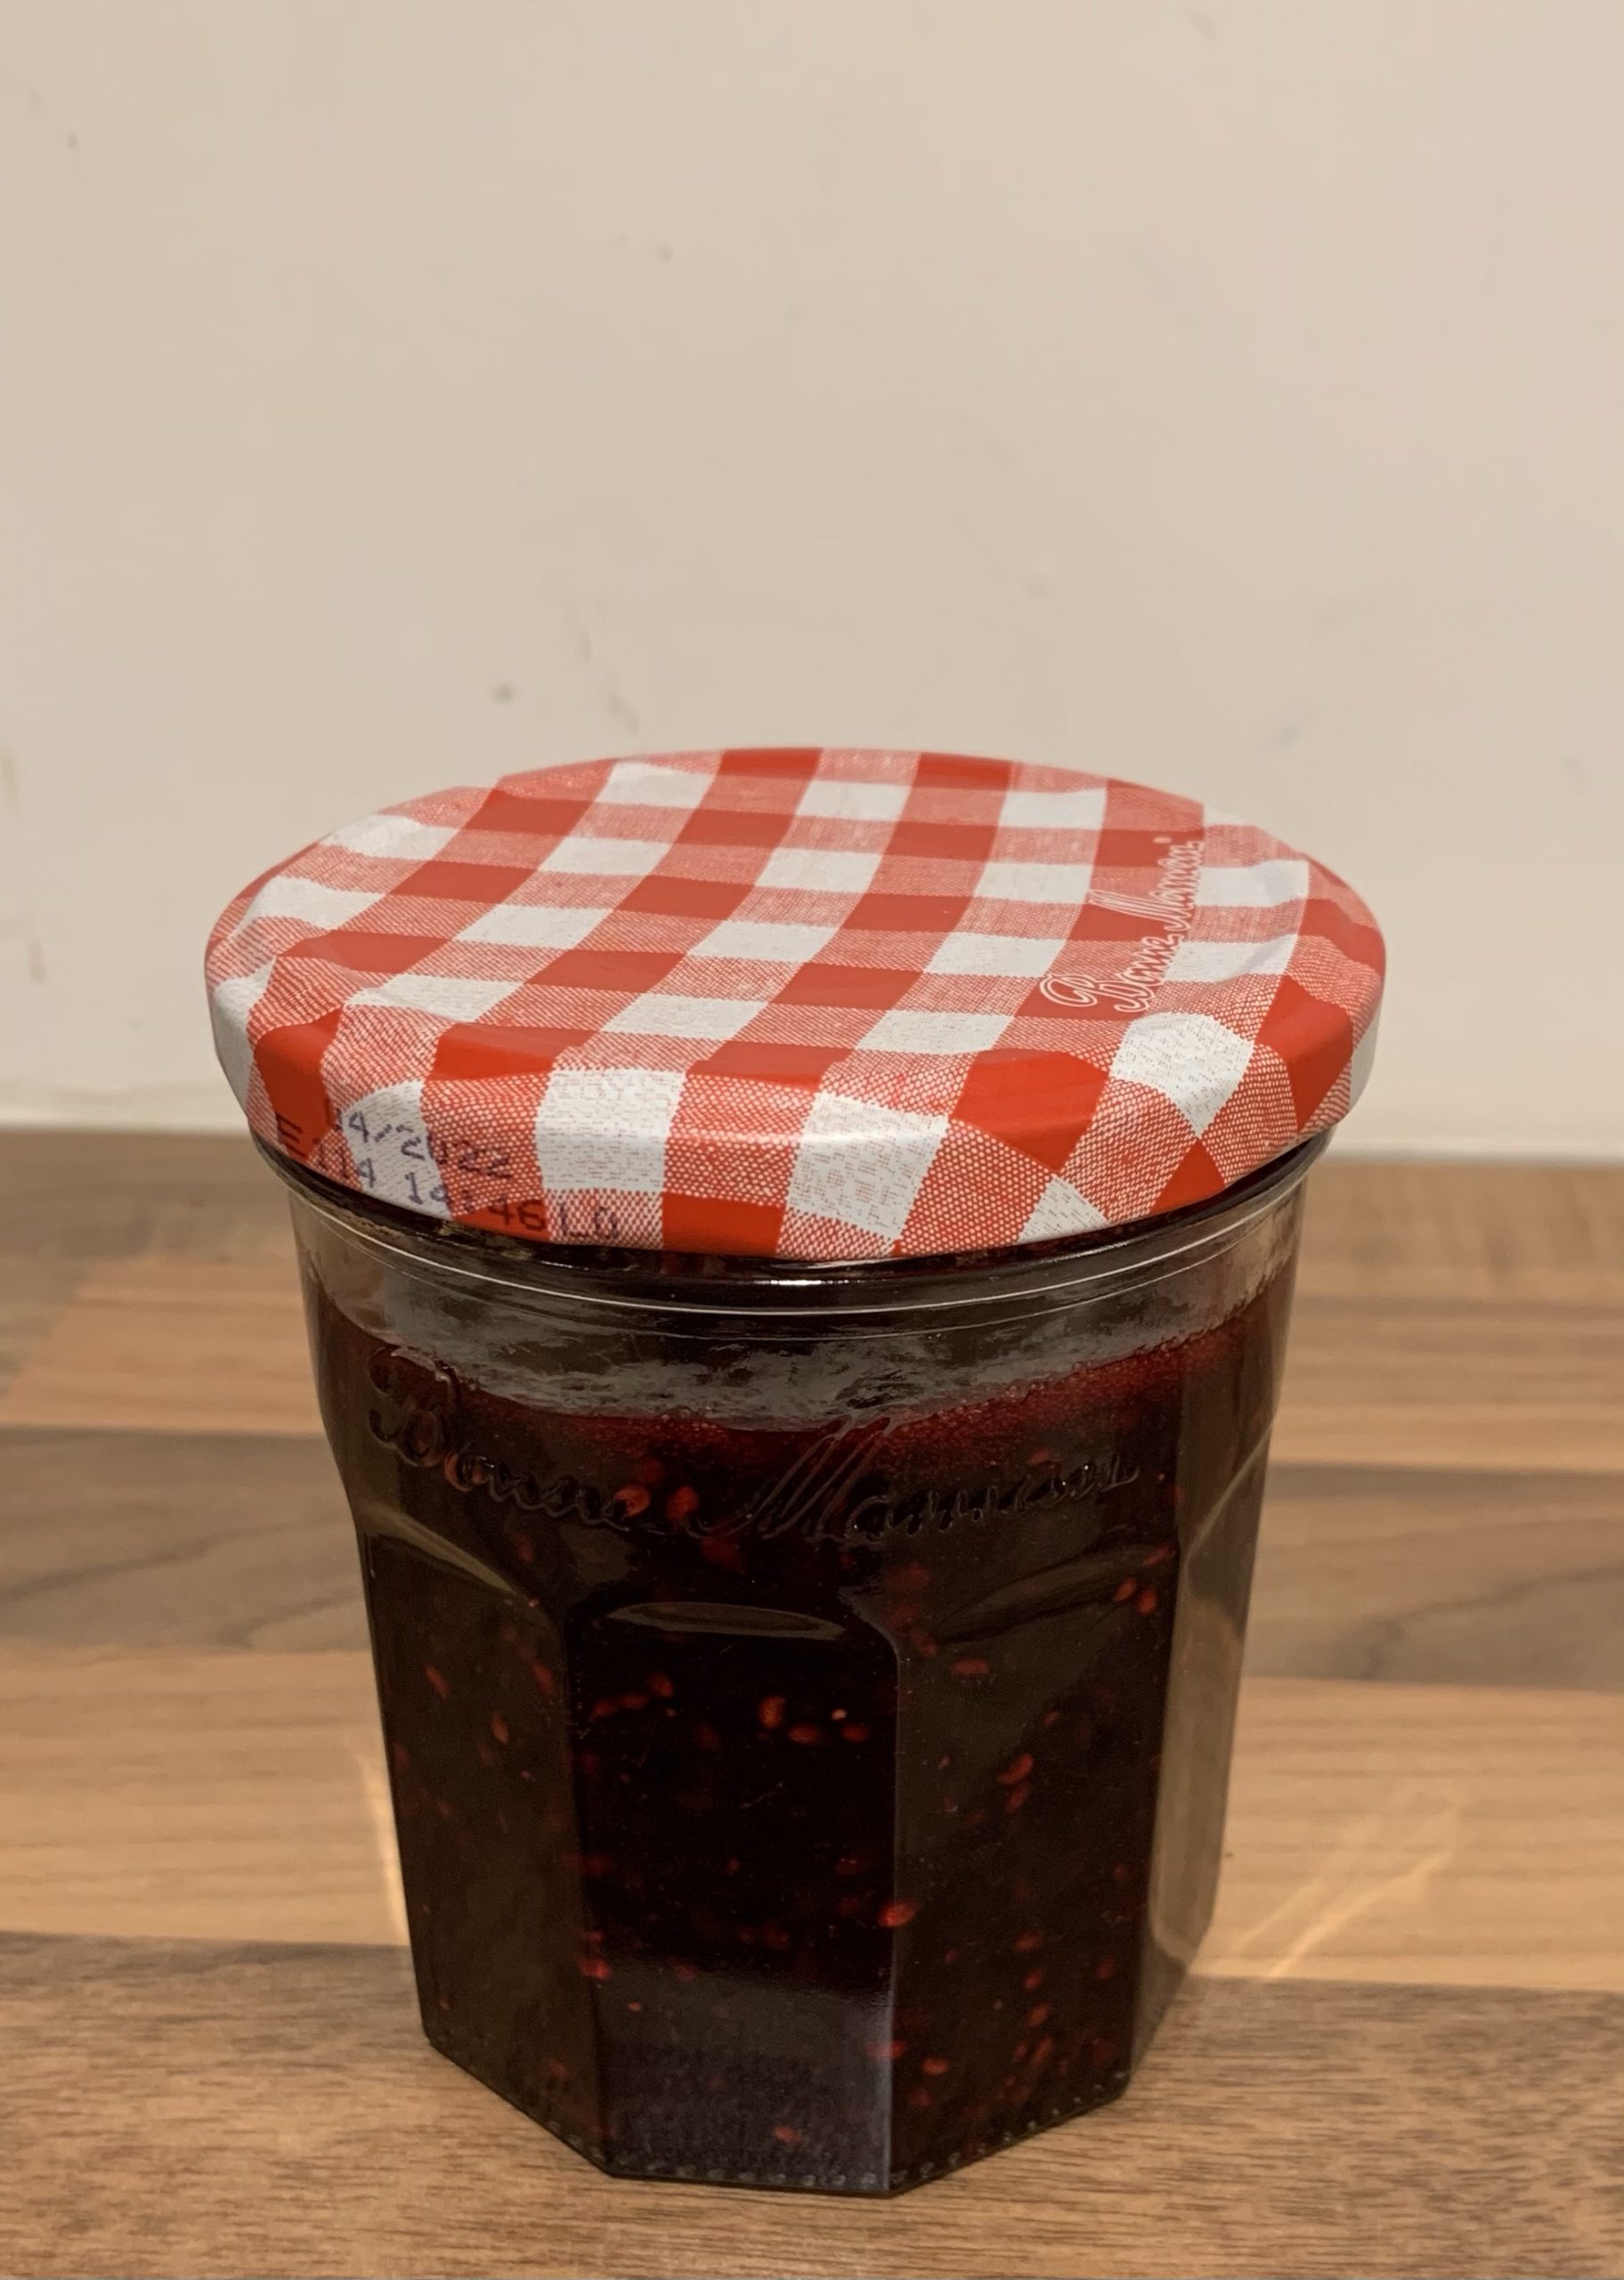 Turning berries into jam